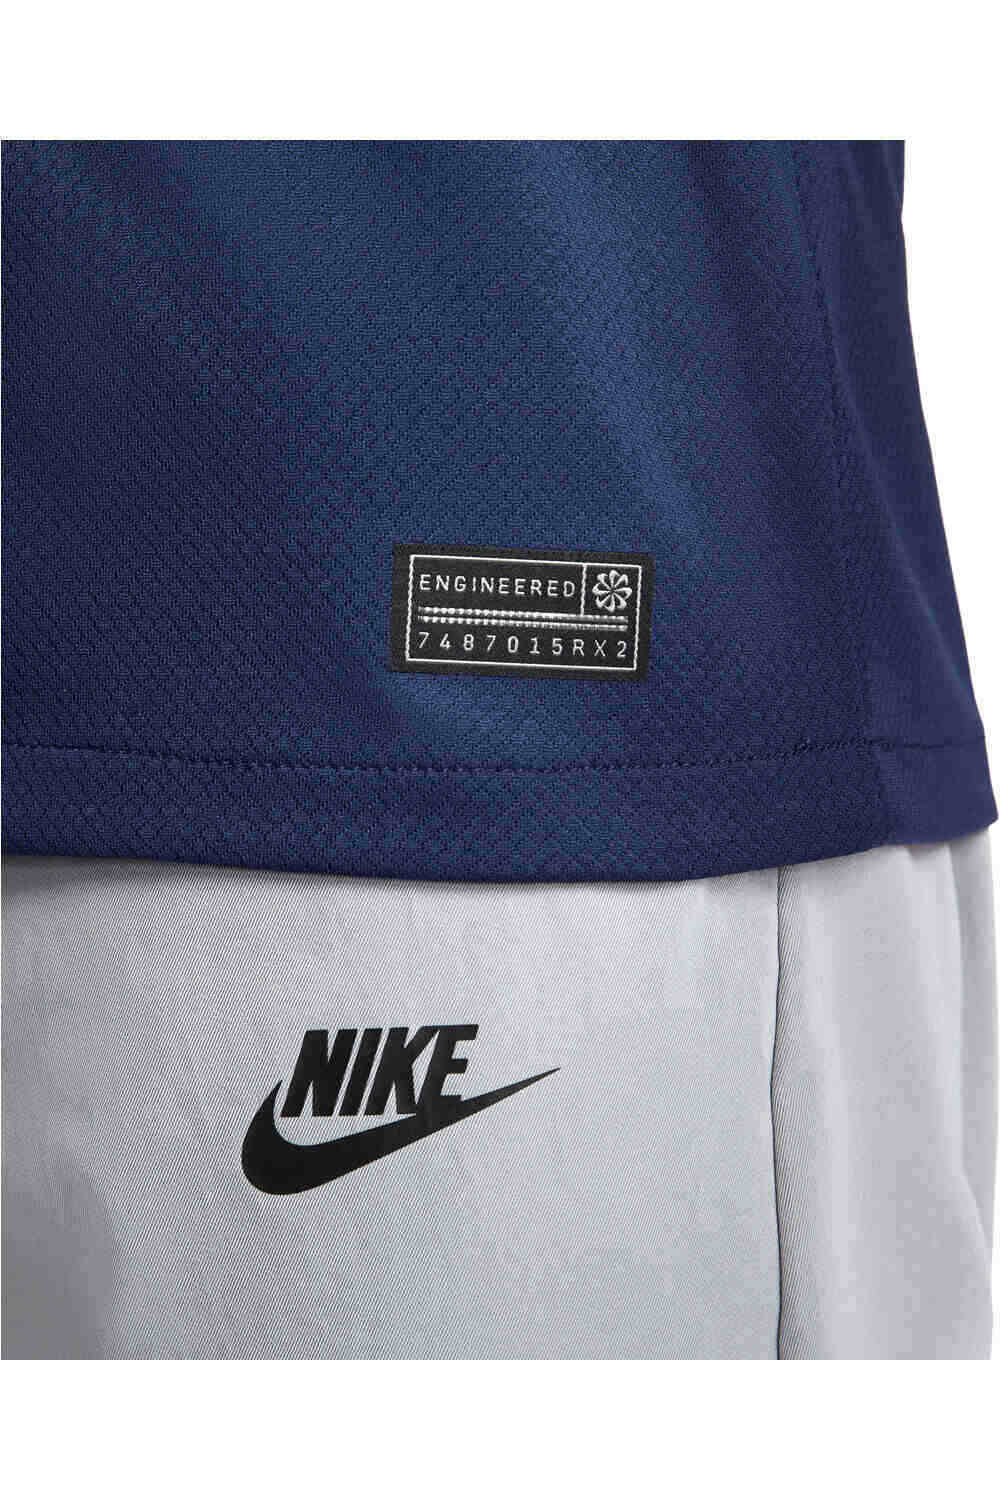 Nike camiseta de fútbol oficiales CAMISETA FRANCIA PRIMERA EQUIPACION 2022 05